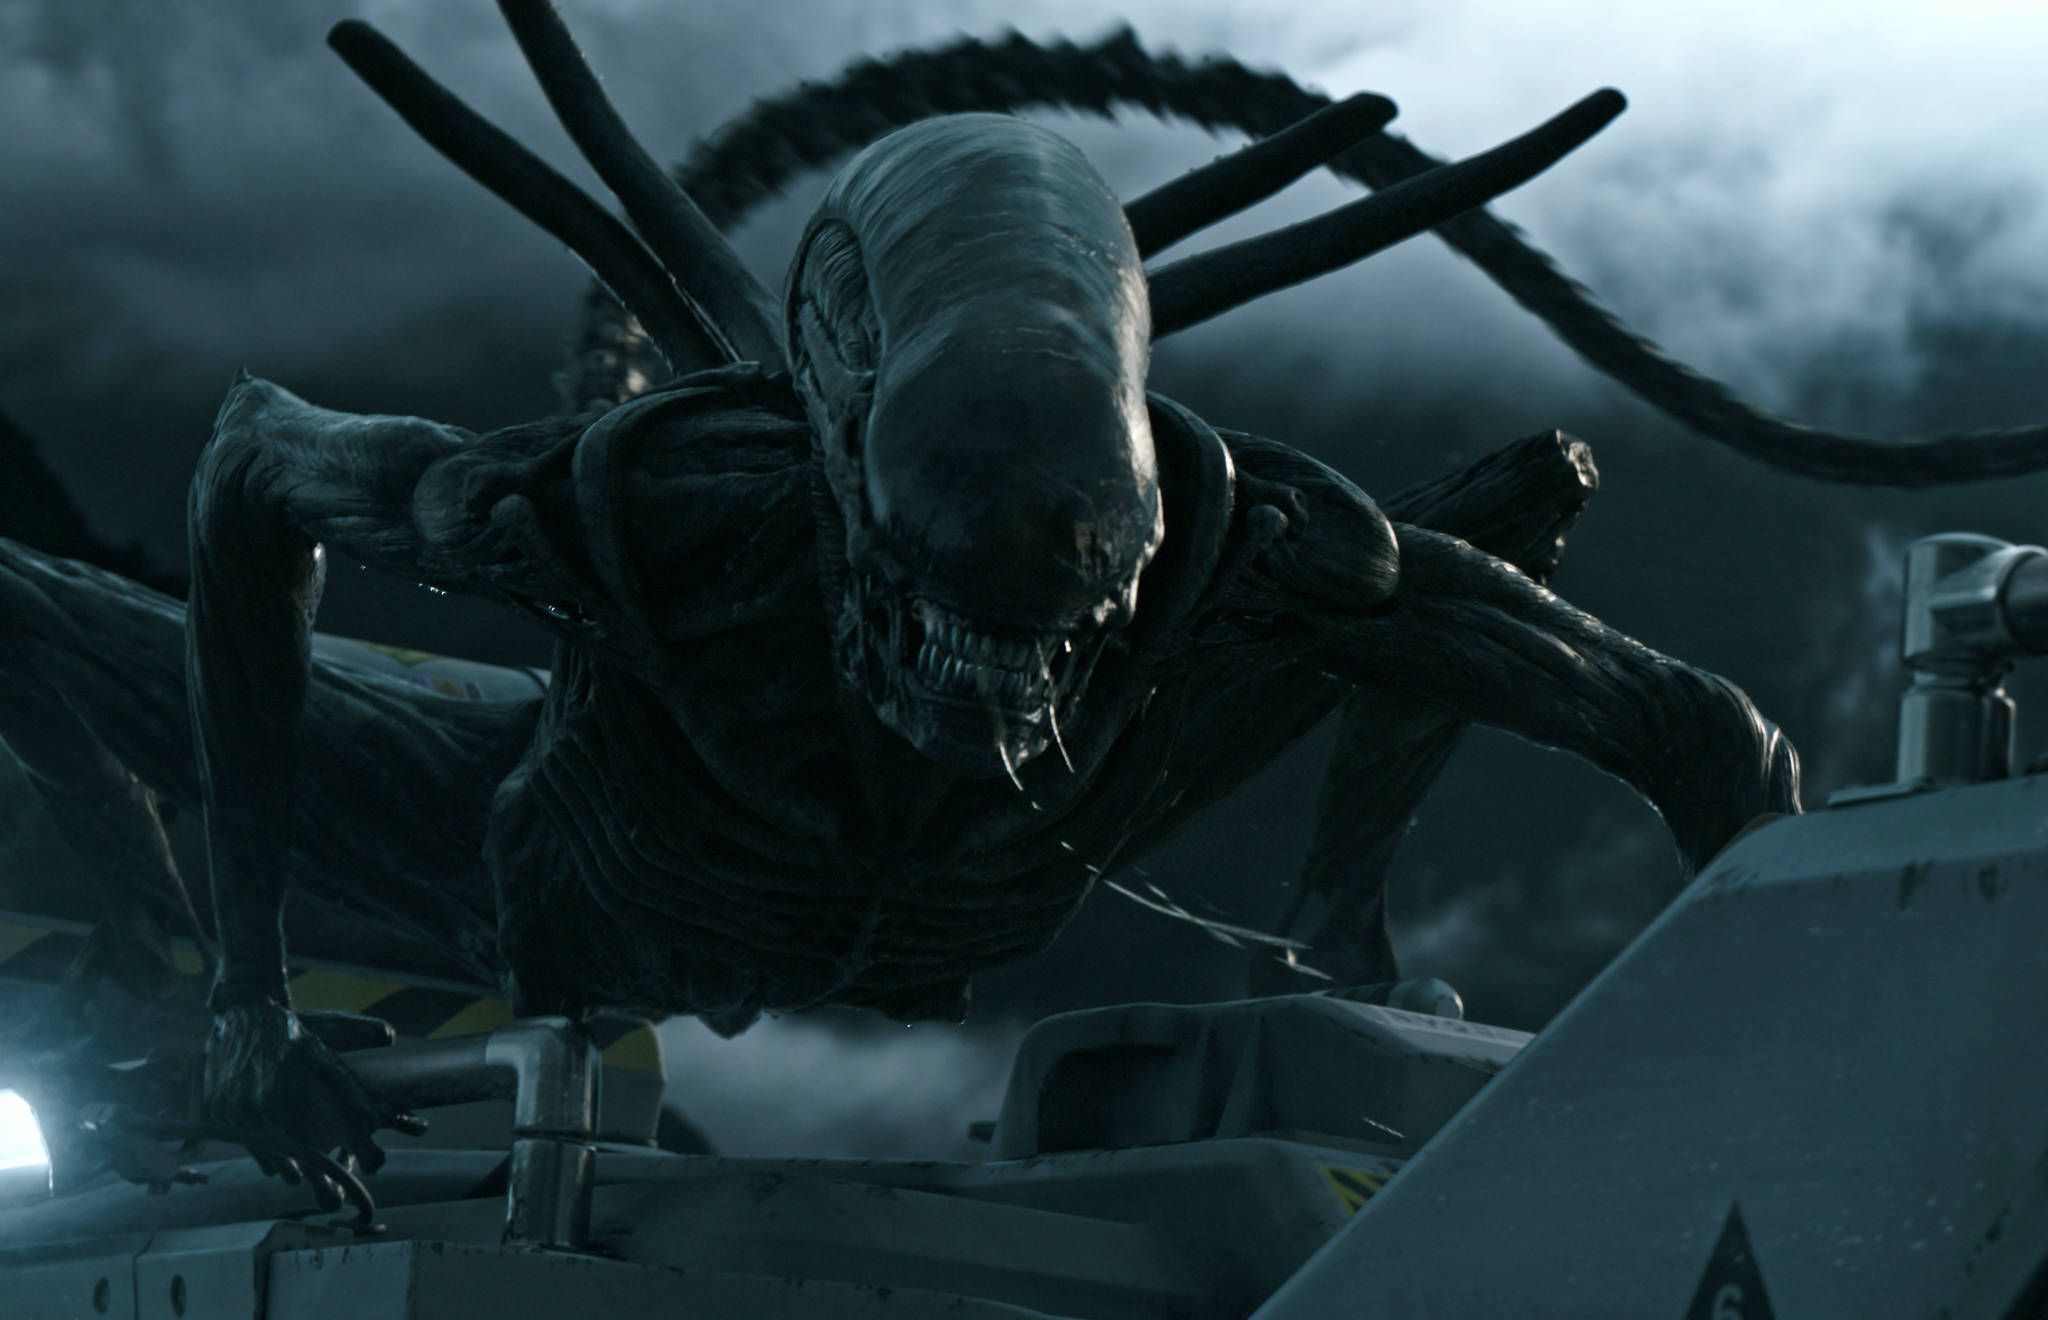 This image released by Twentieth Century Fox shows a scene from “Alien: Covenant.” (Twentieth Century Fox via AP)